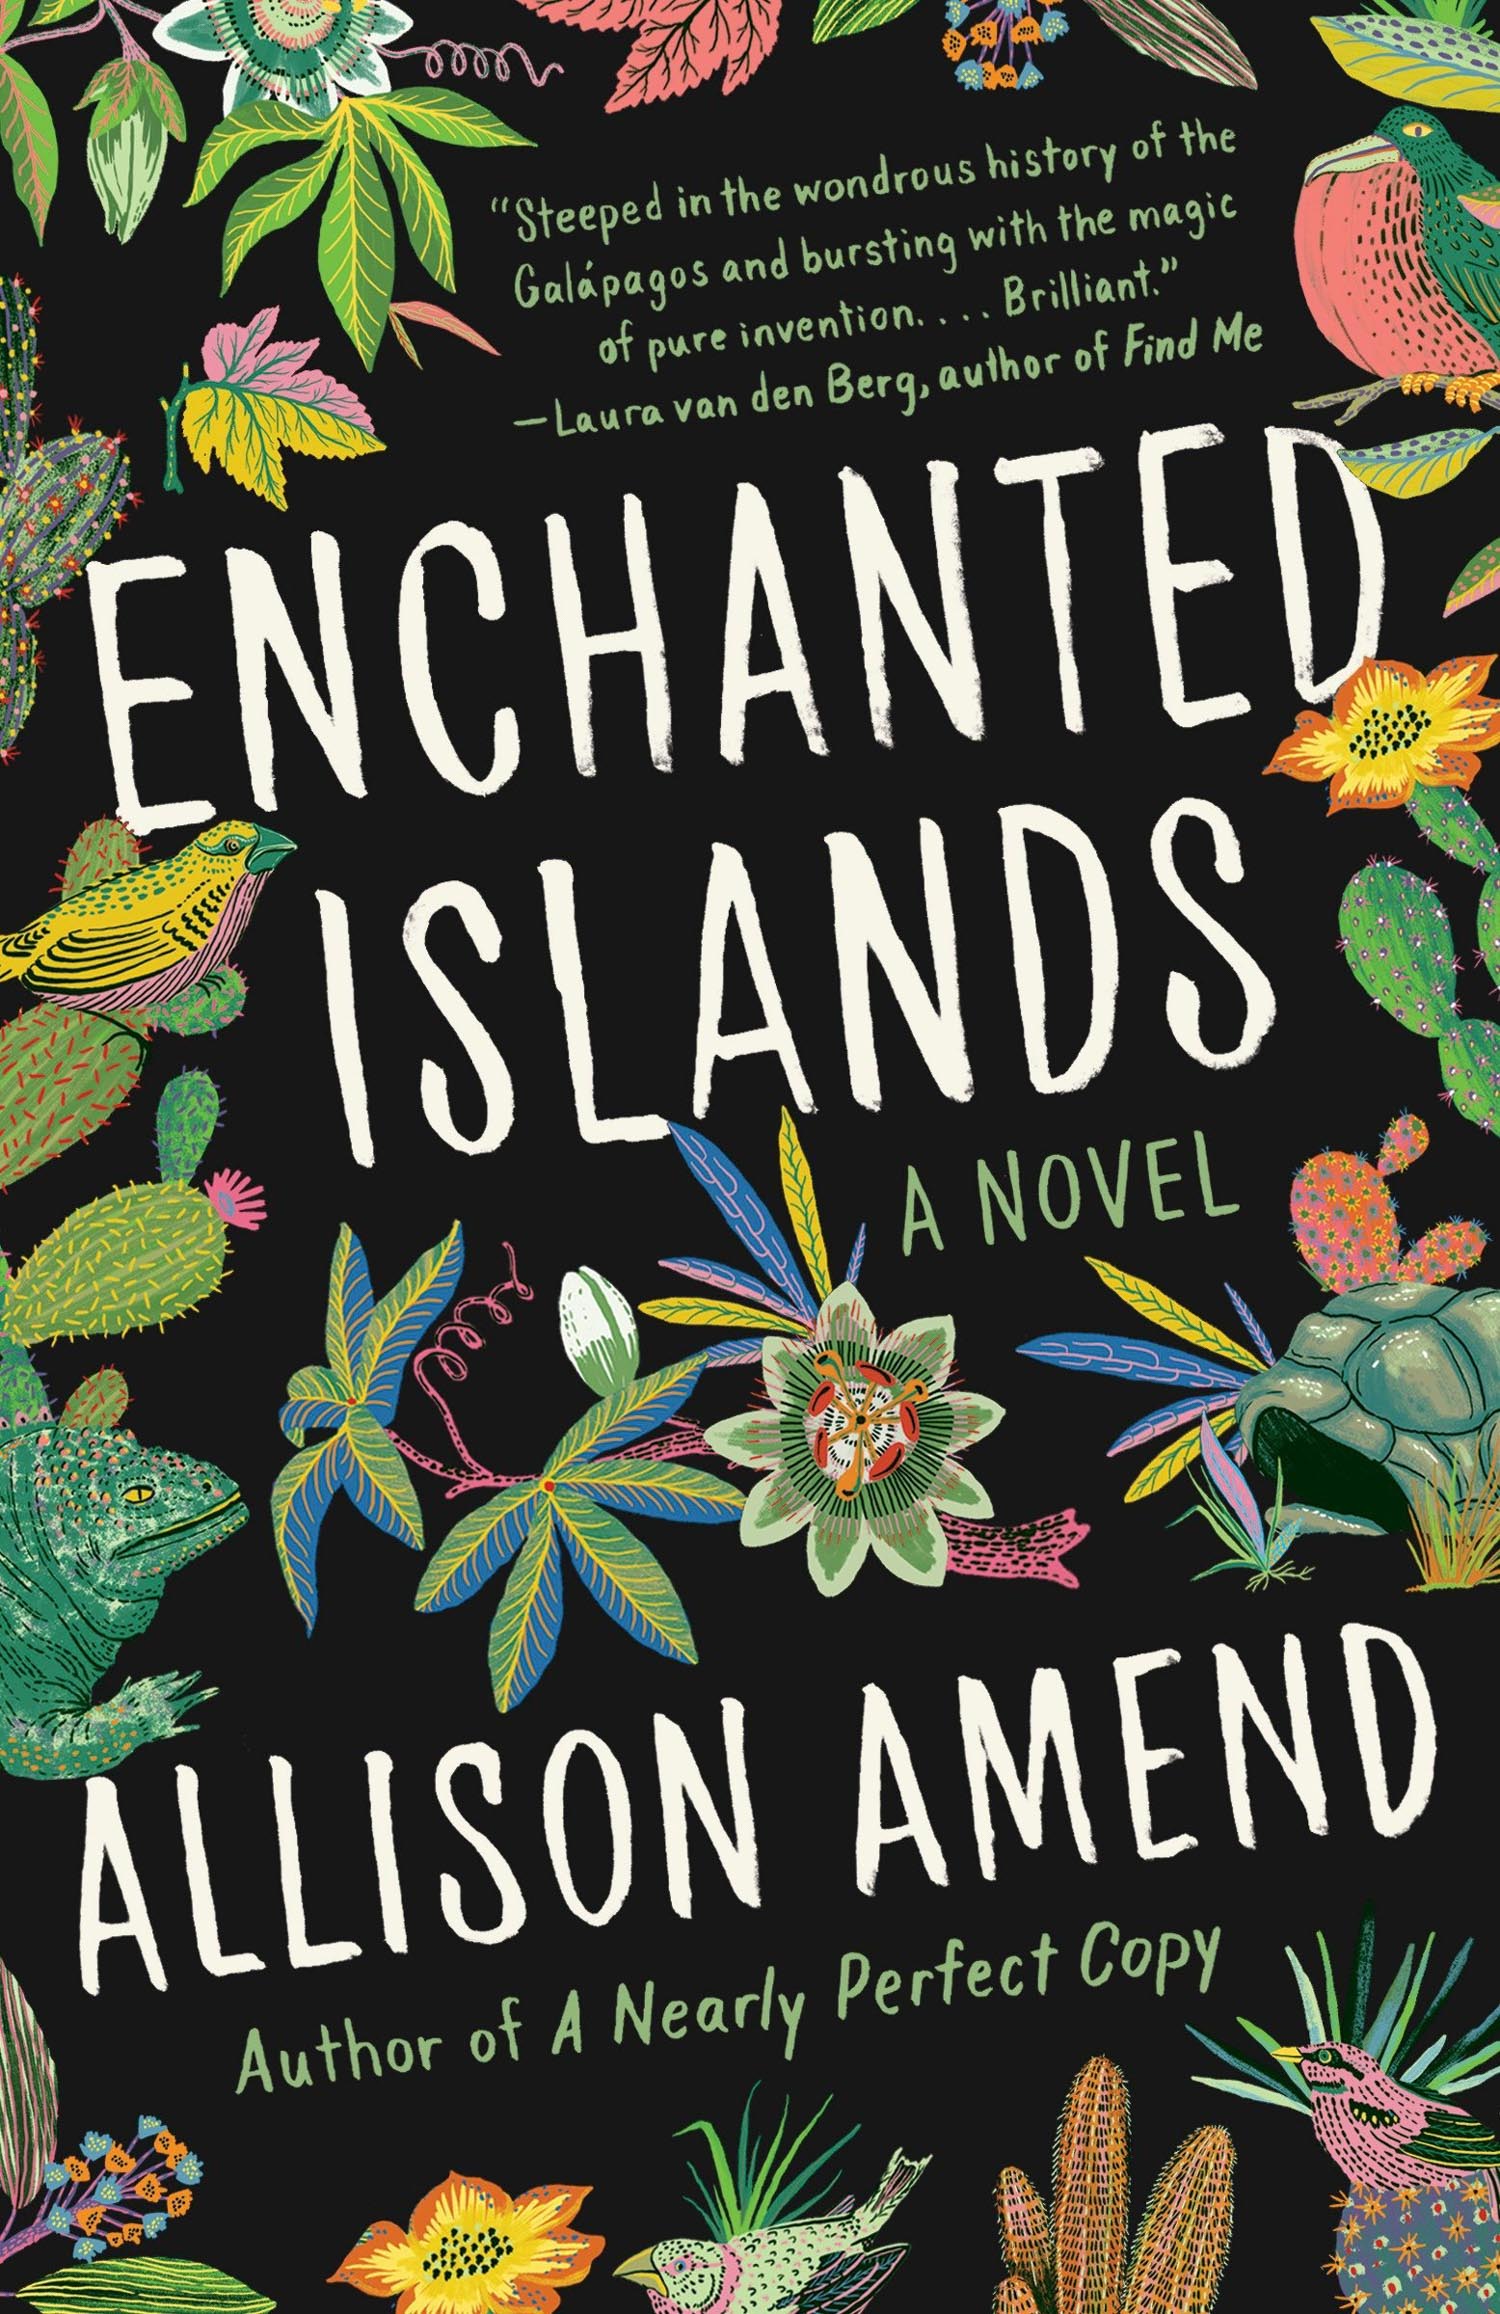 Enchanted Islands - A Novel by Allison Amend